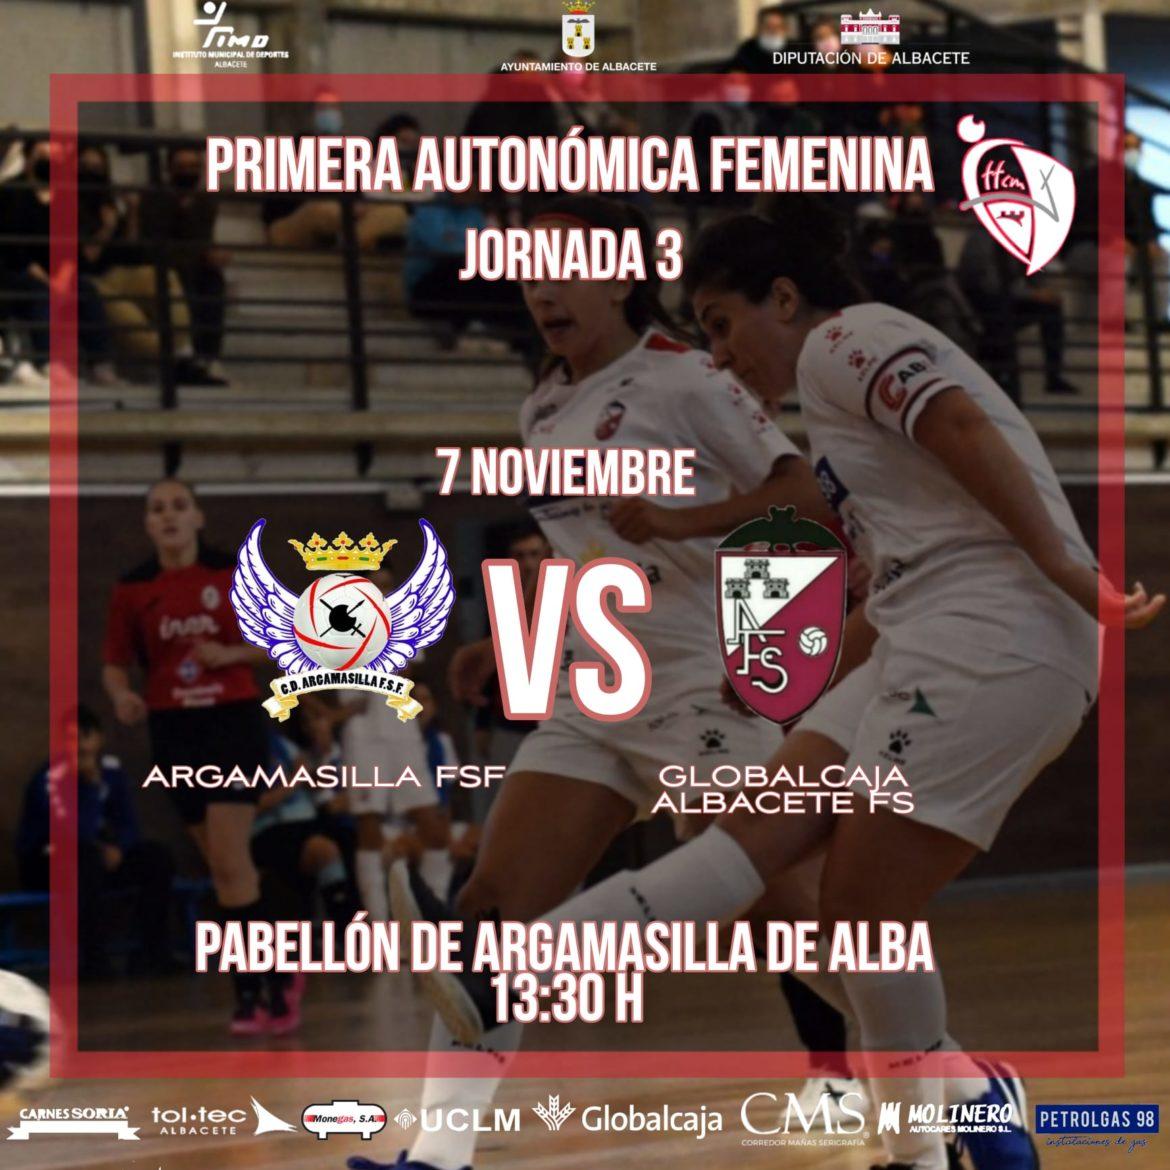 Previa | El Globalcaja Albacete FS visita Argamasilla en un duelo de aspirantes